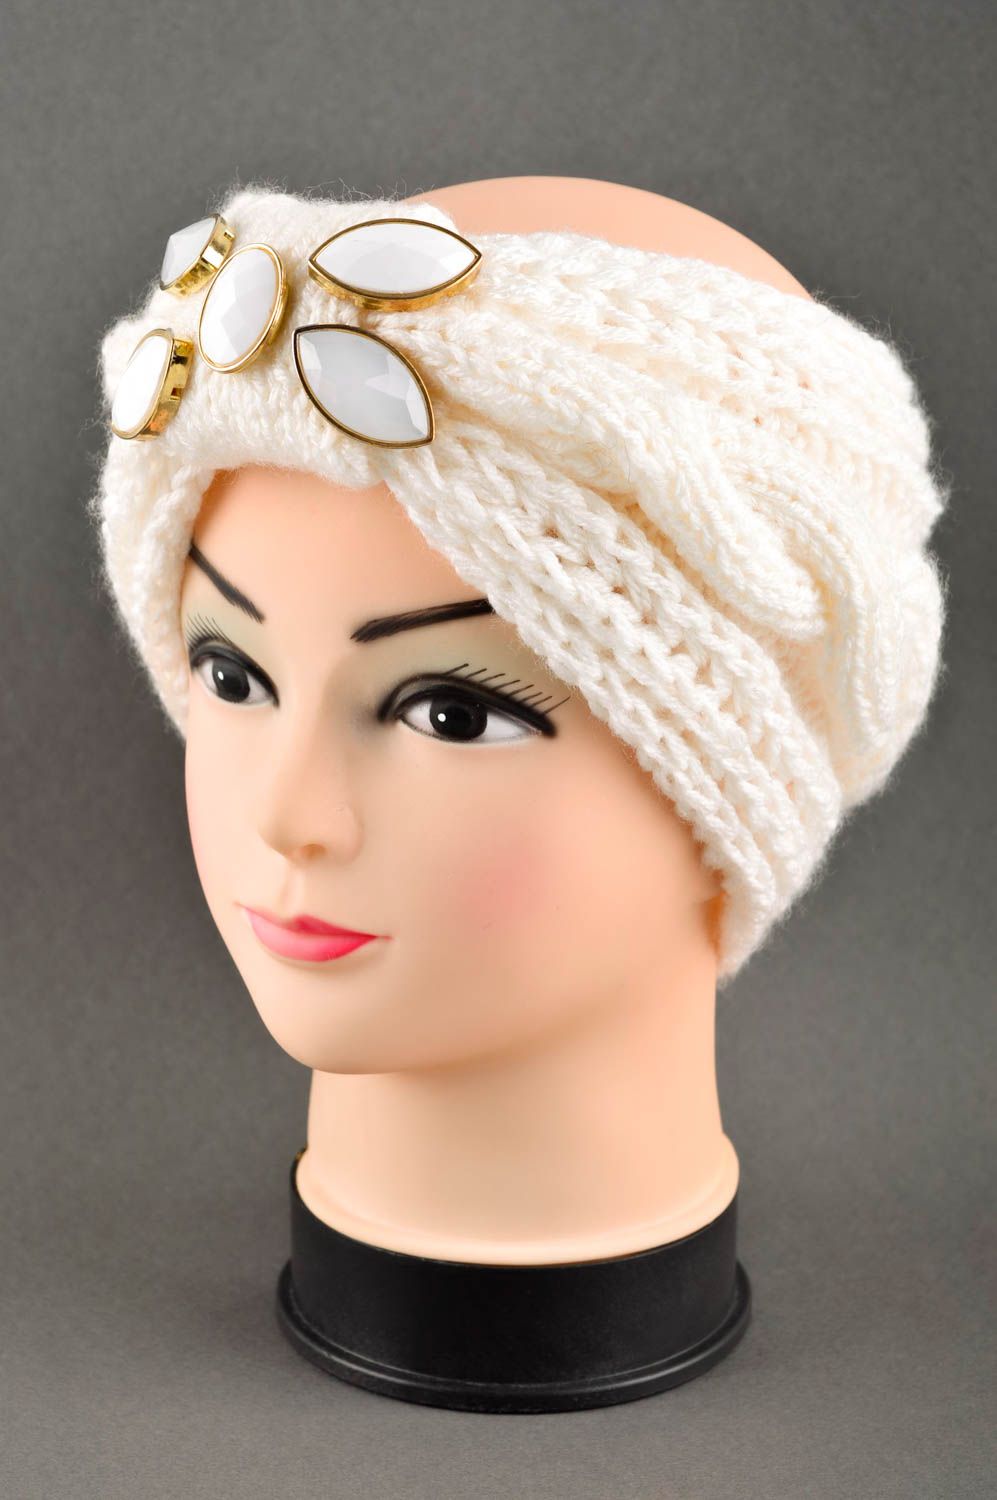 Handmade festive headband knitted stylish turban accessory in Eastern style photo 1